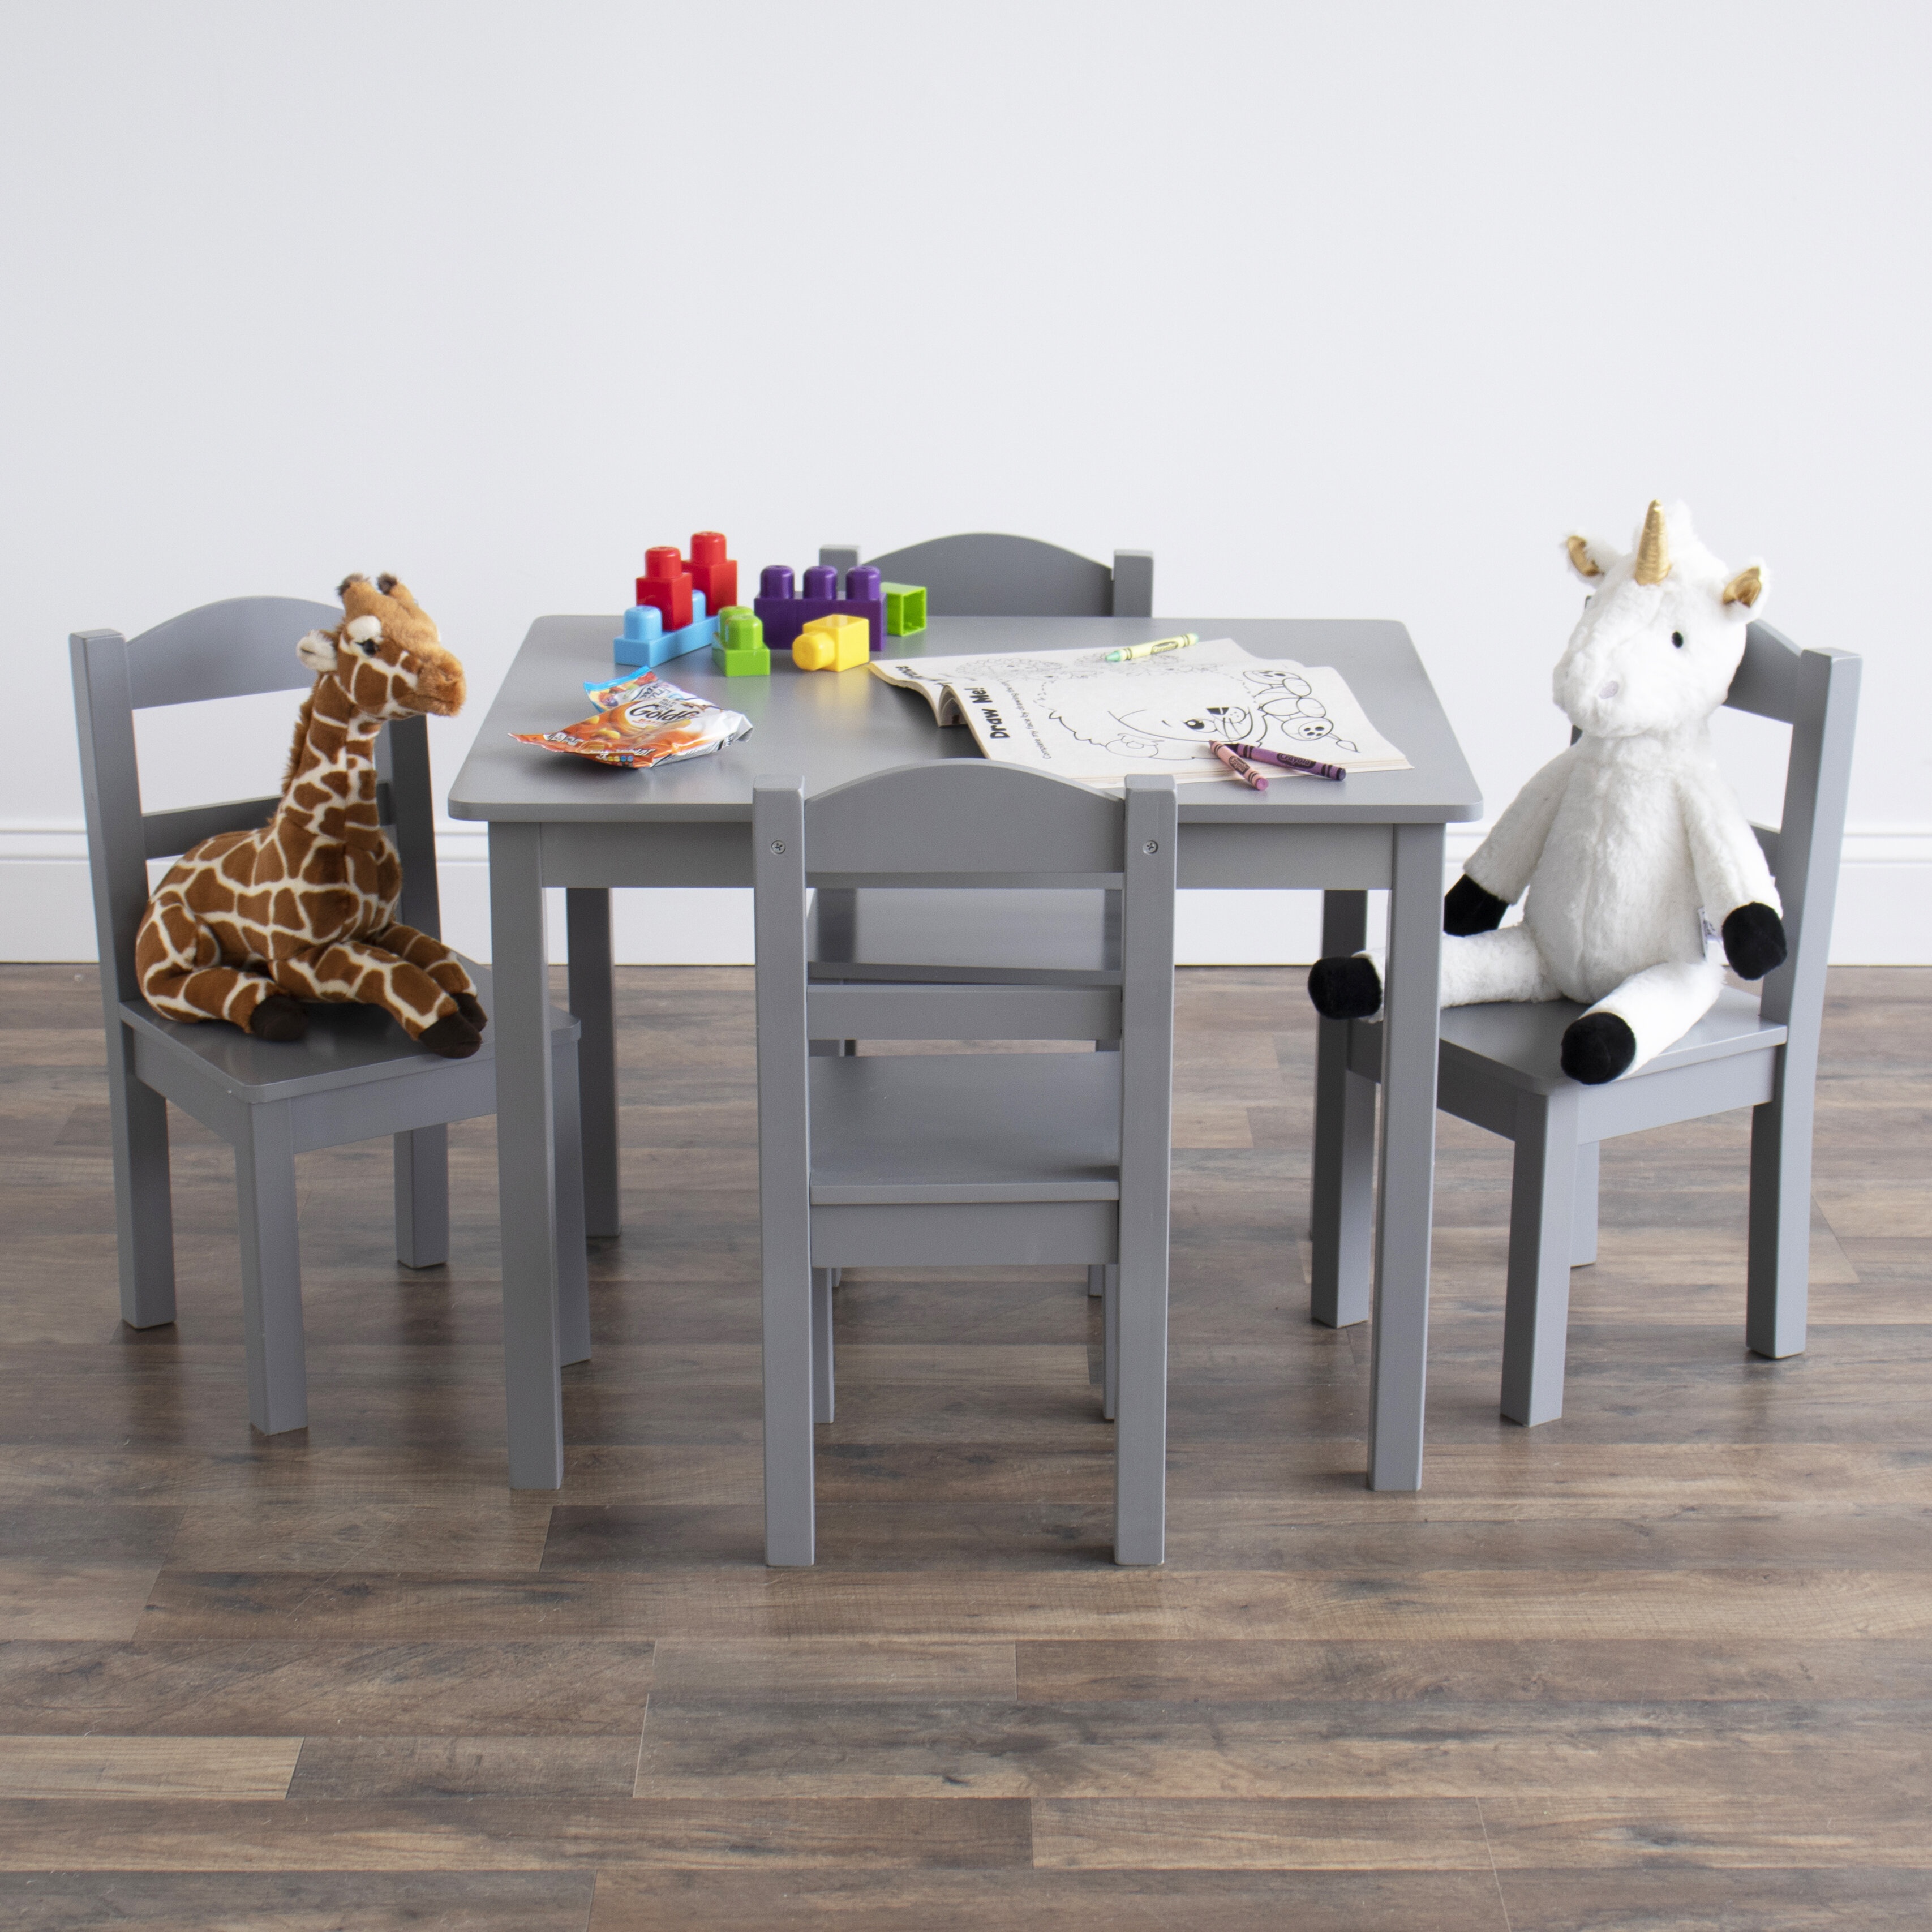 https://visualhunt.com/photos/23/bran-kids-rectangular-play-activity-table-and-chair-set-1.jpg